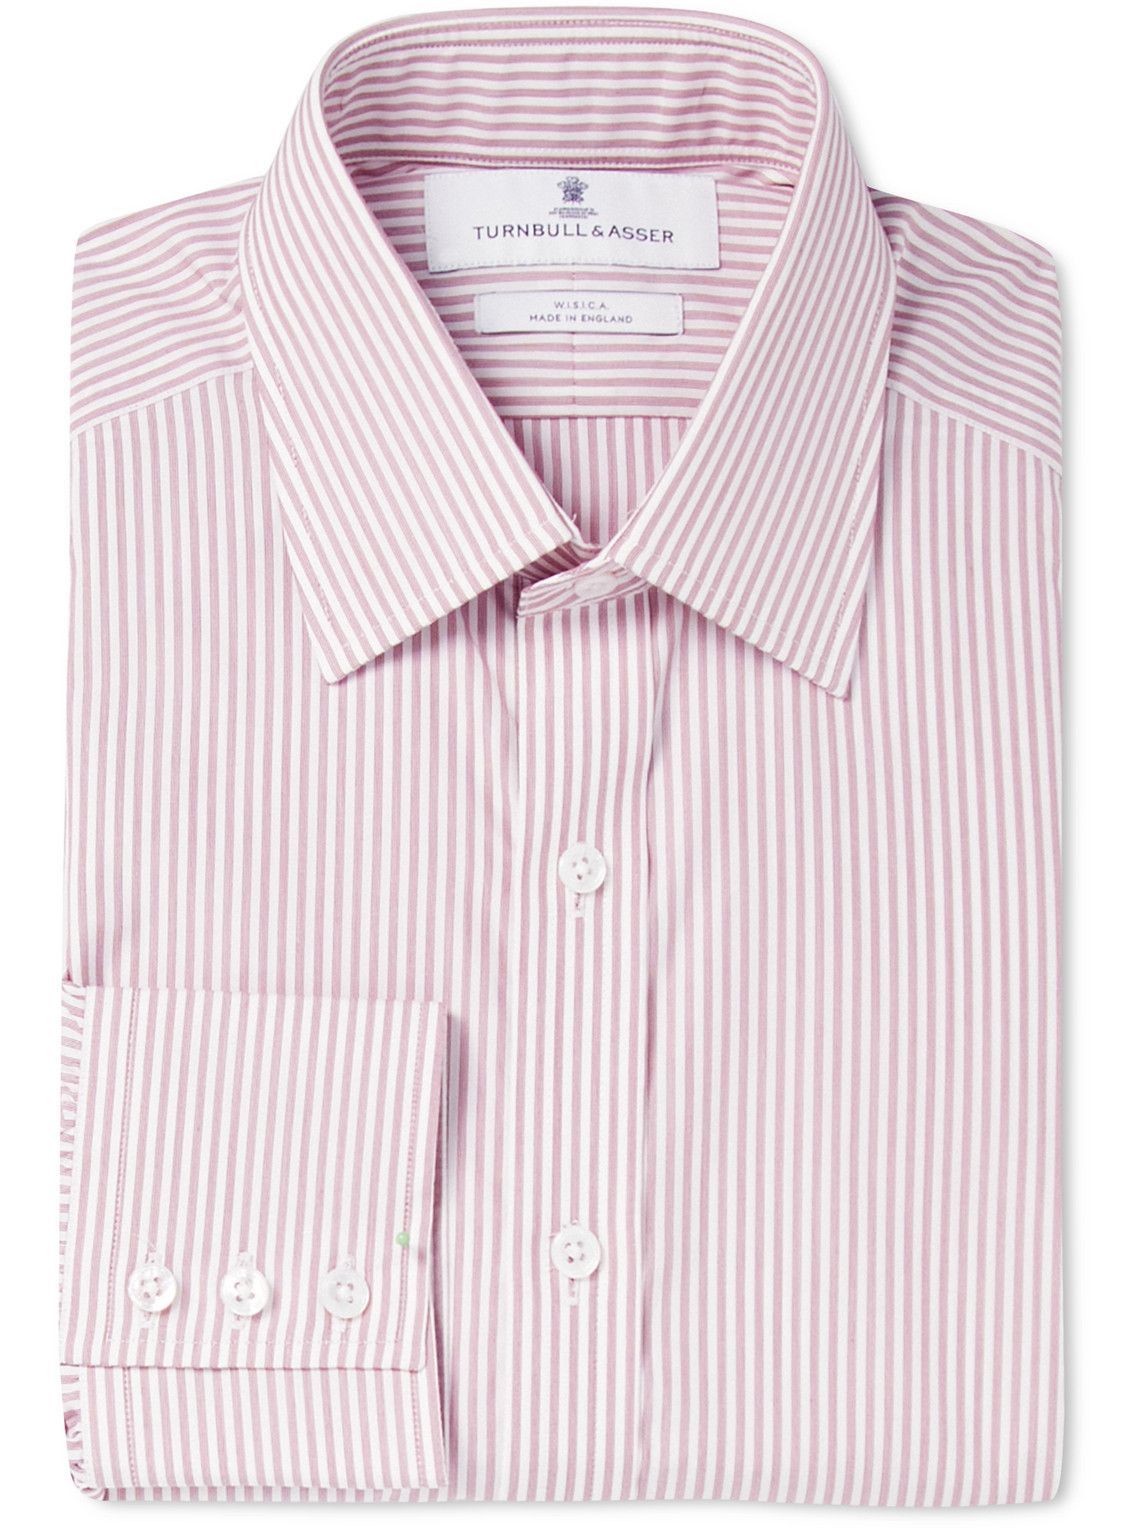 Turnbull & Asser - Striped Cotton Shirt - Pink Turnbull & Asser